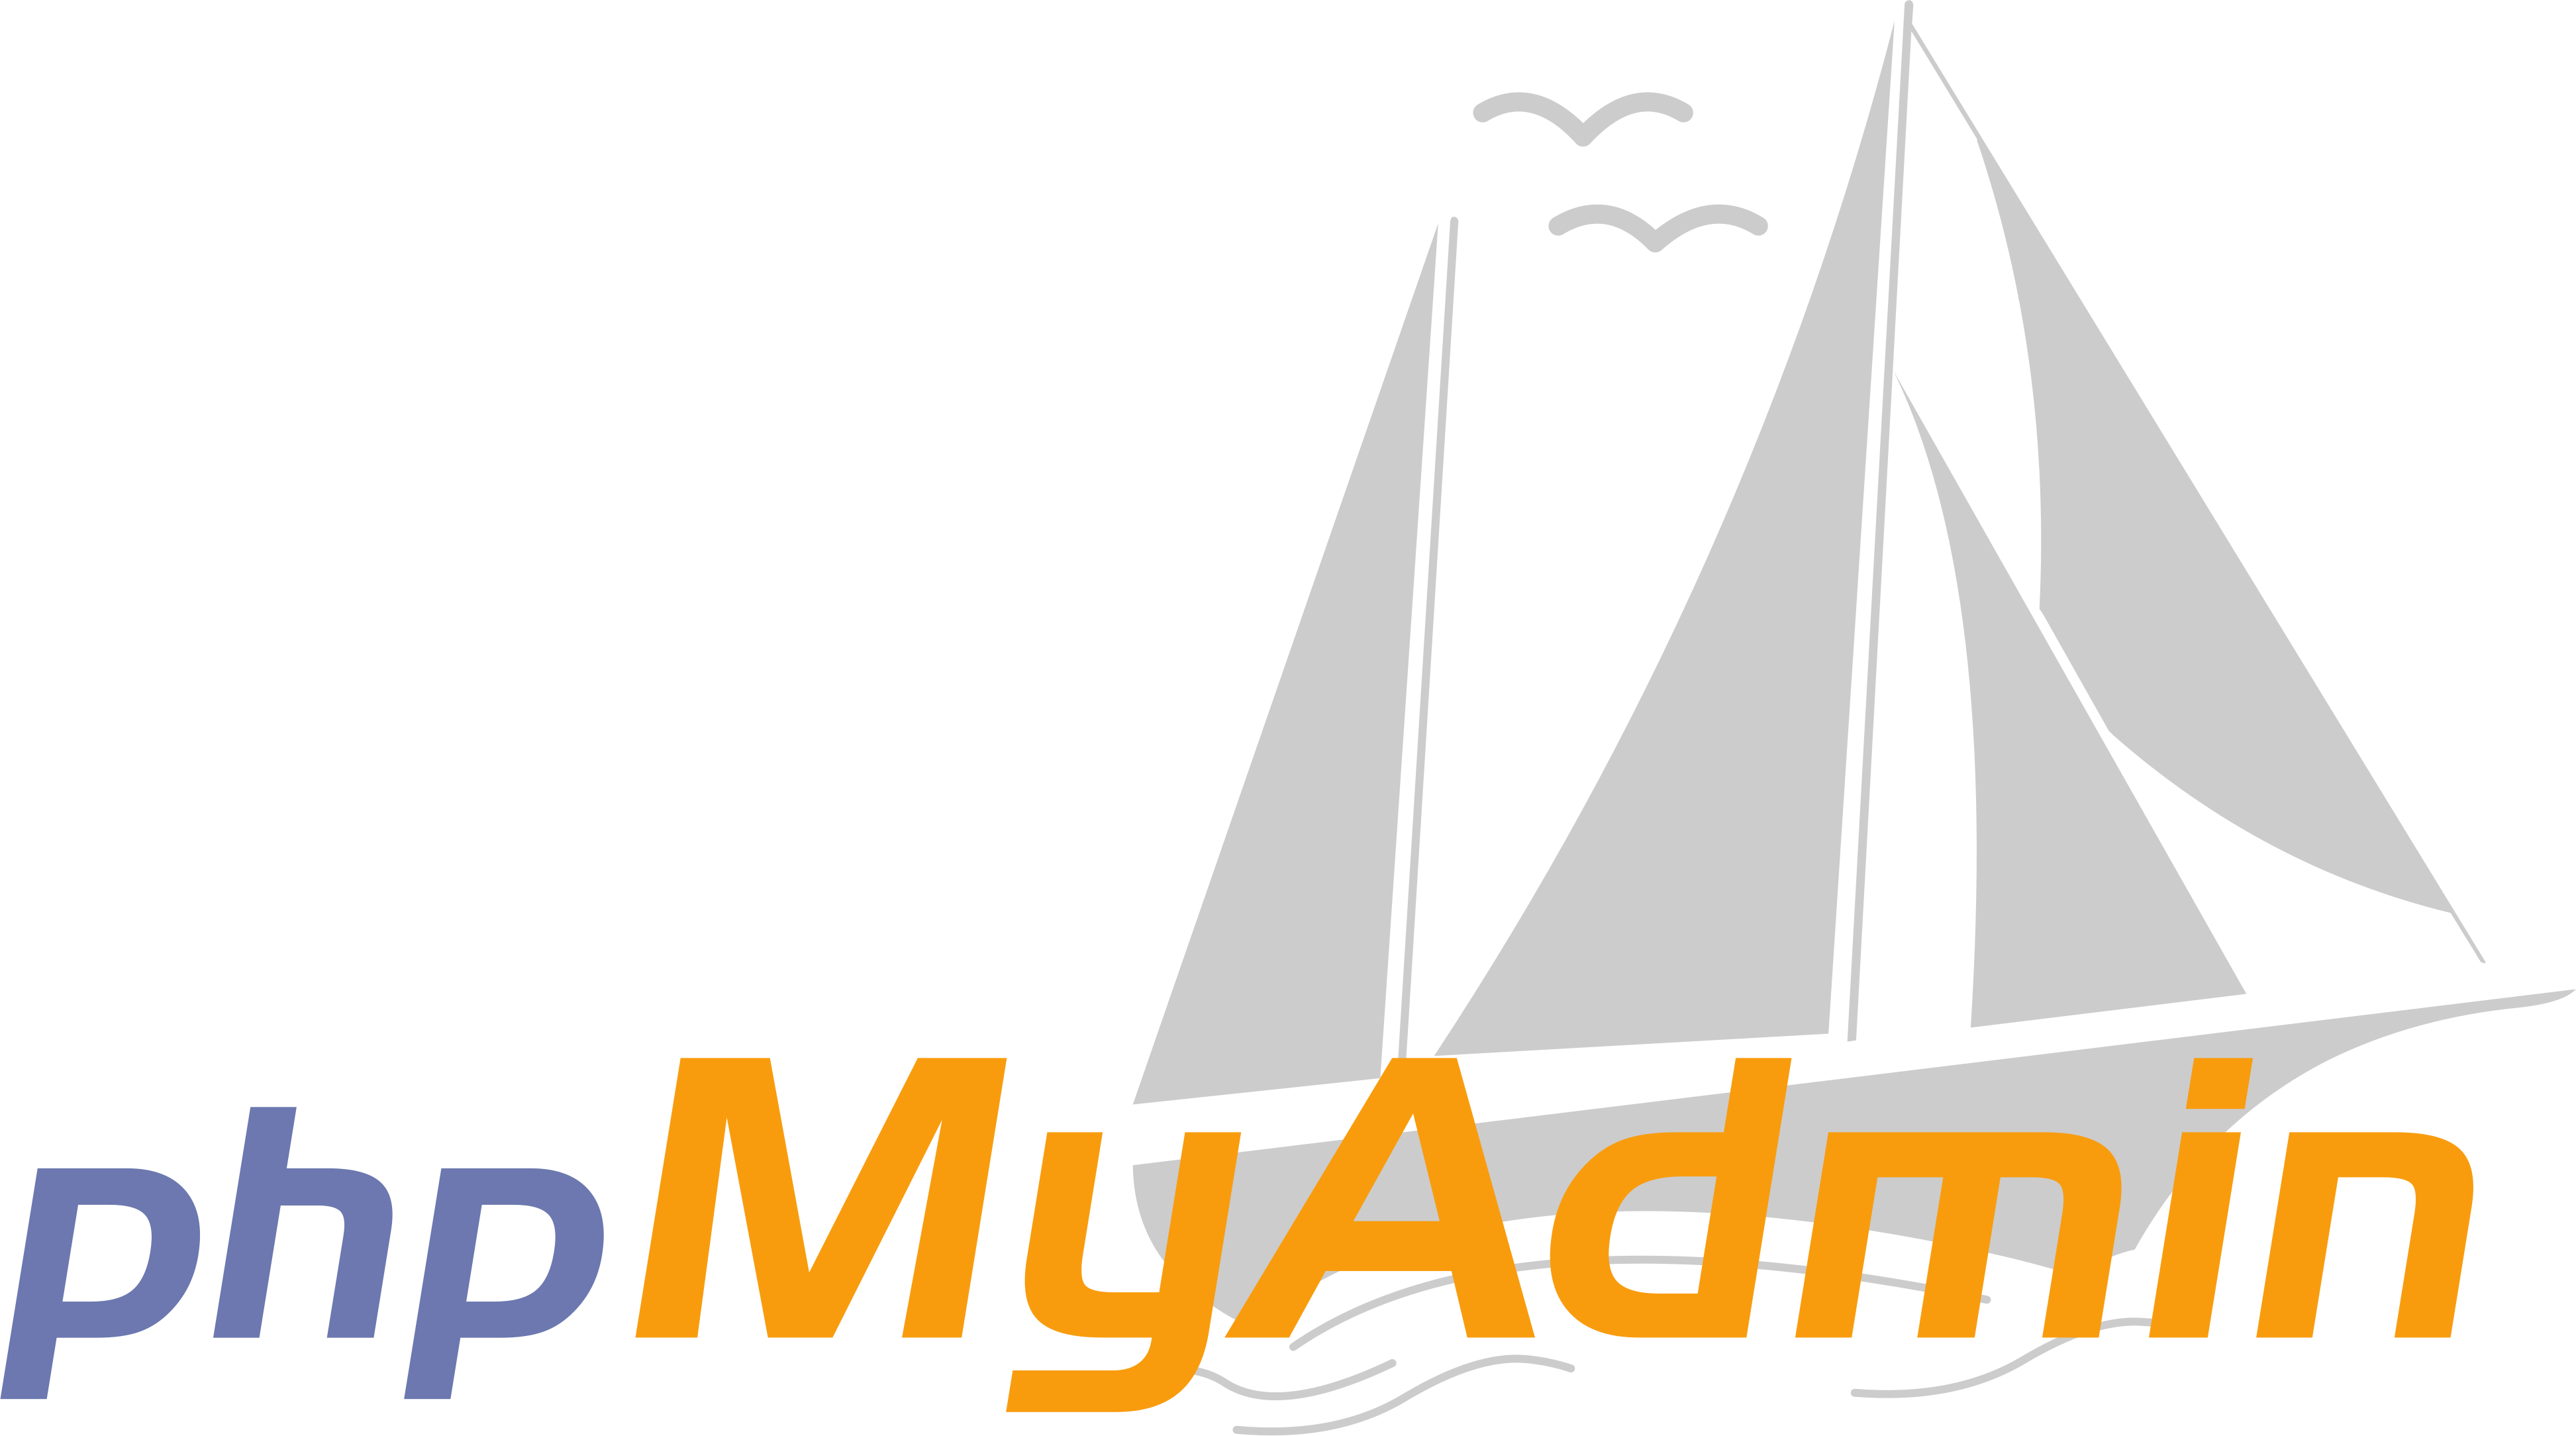 phpMyAdmin Logo PNG Image